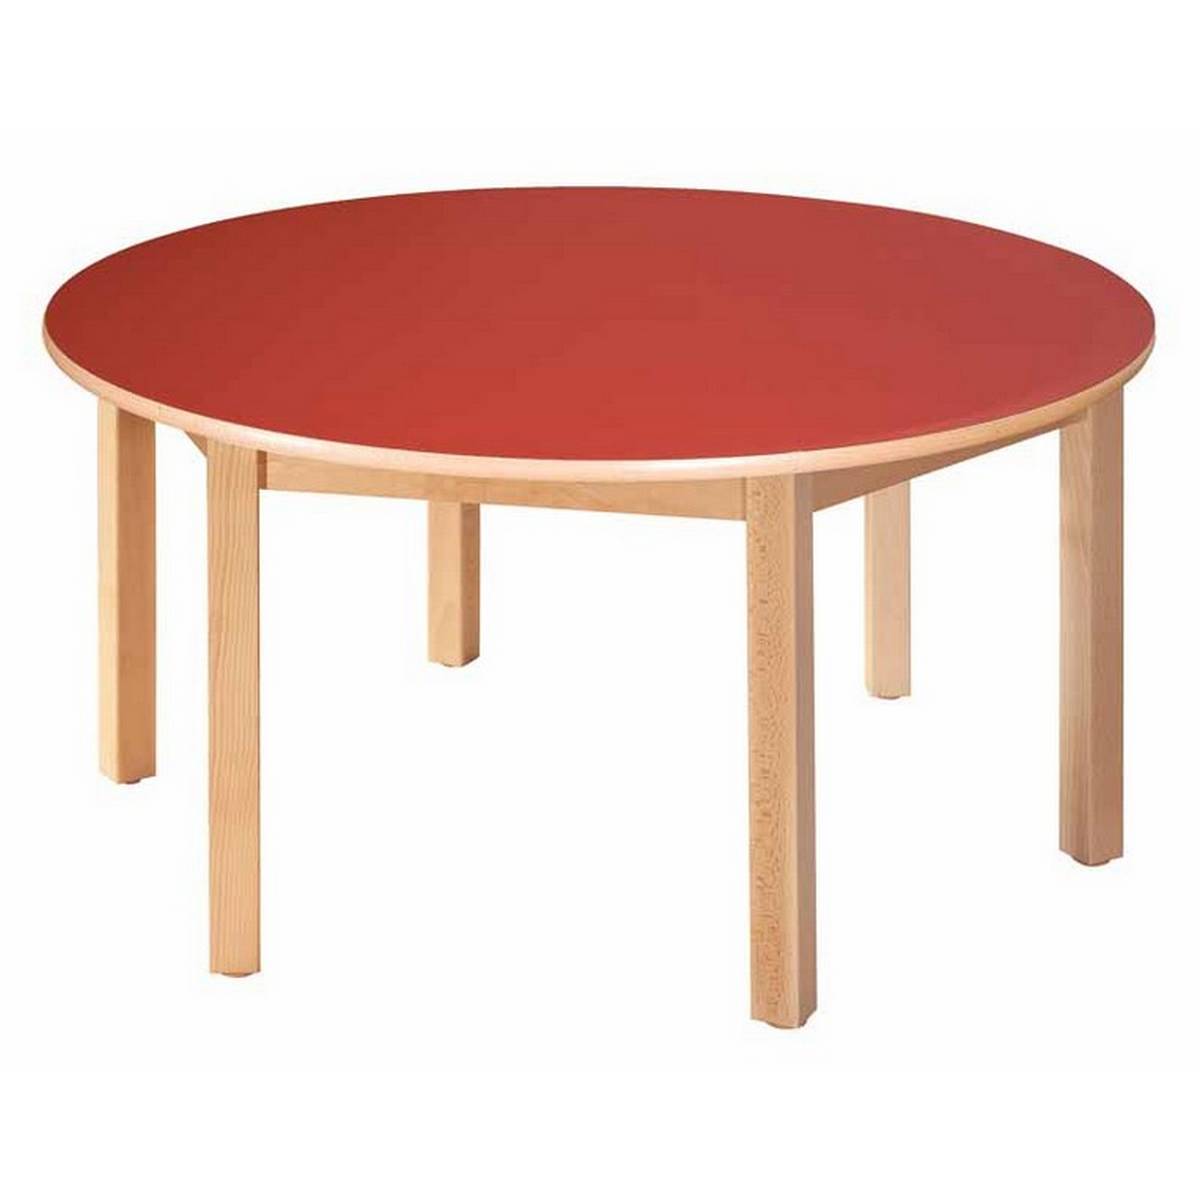 Round Table Red 64cm Abc School, Abc Round Coffee Table Uk